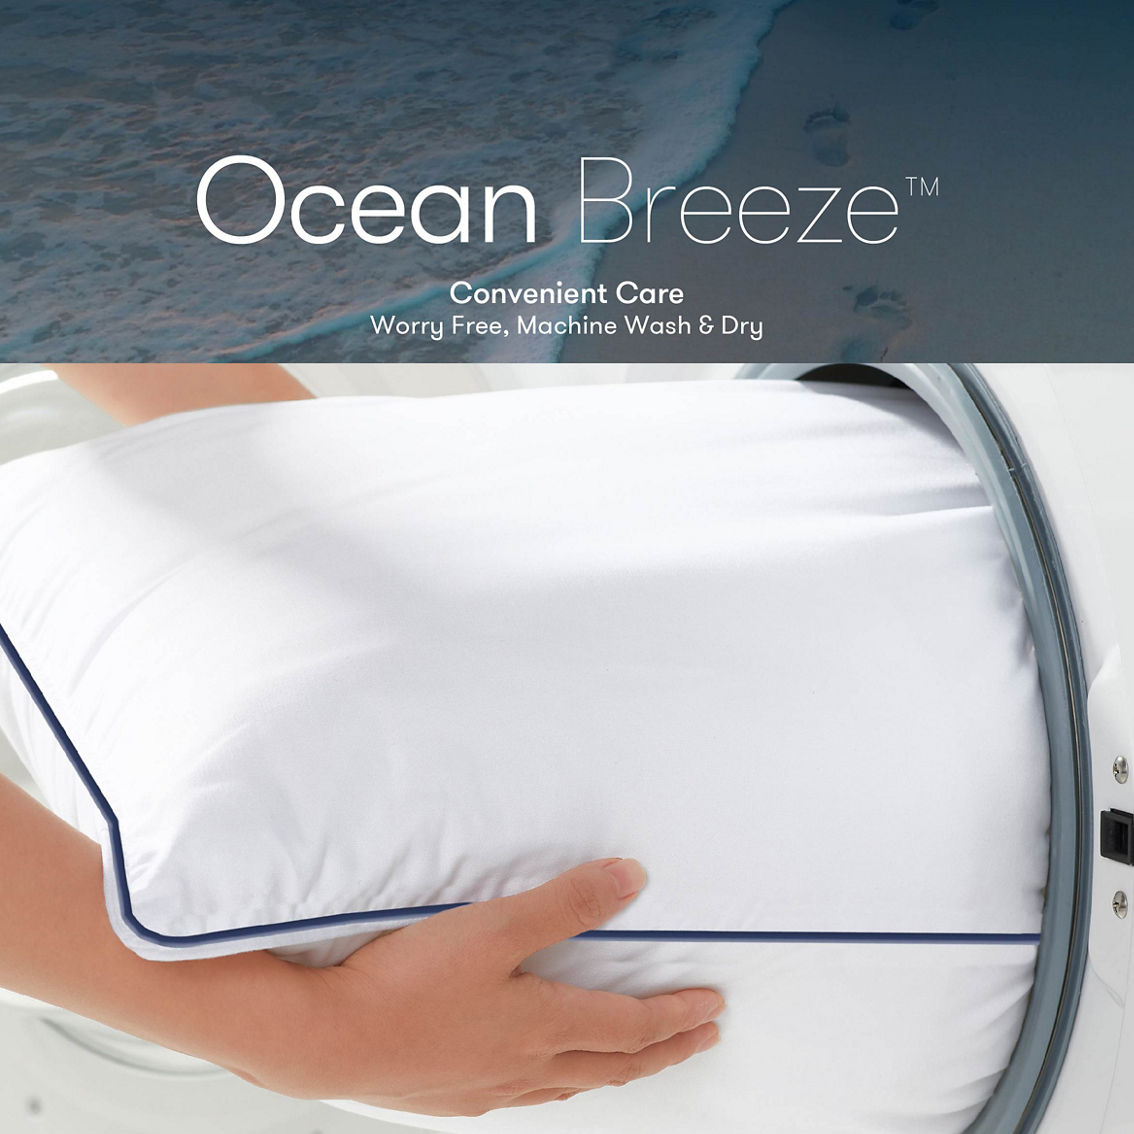 Serta Ocean Breeze Down Alternative Pillow - Image 3 of 4